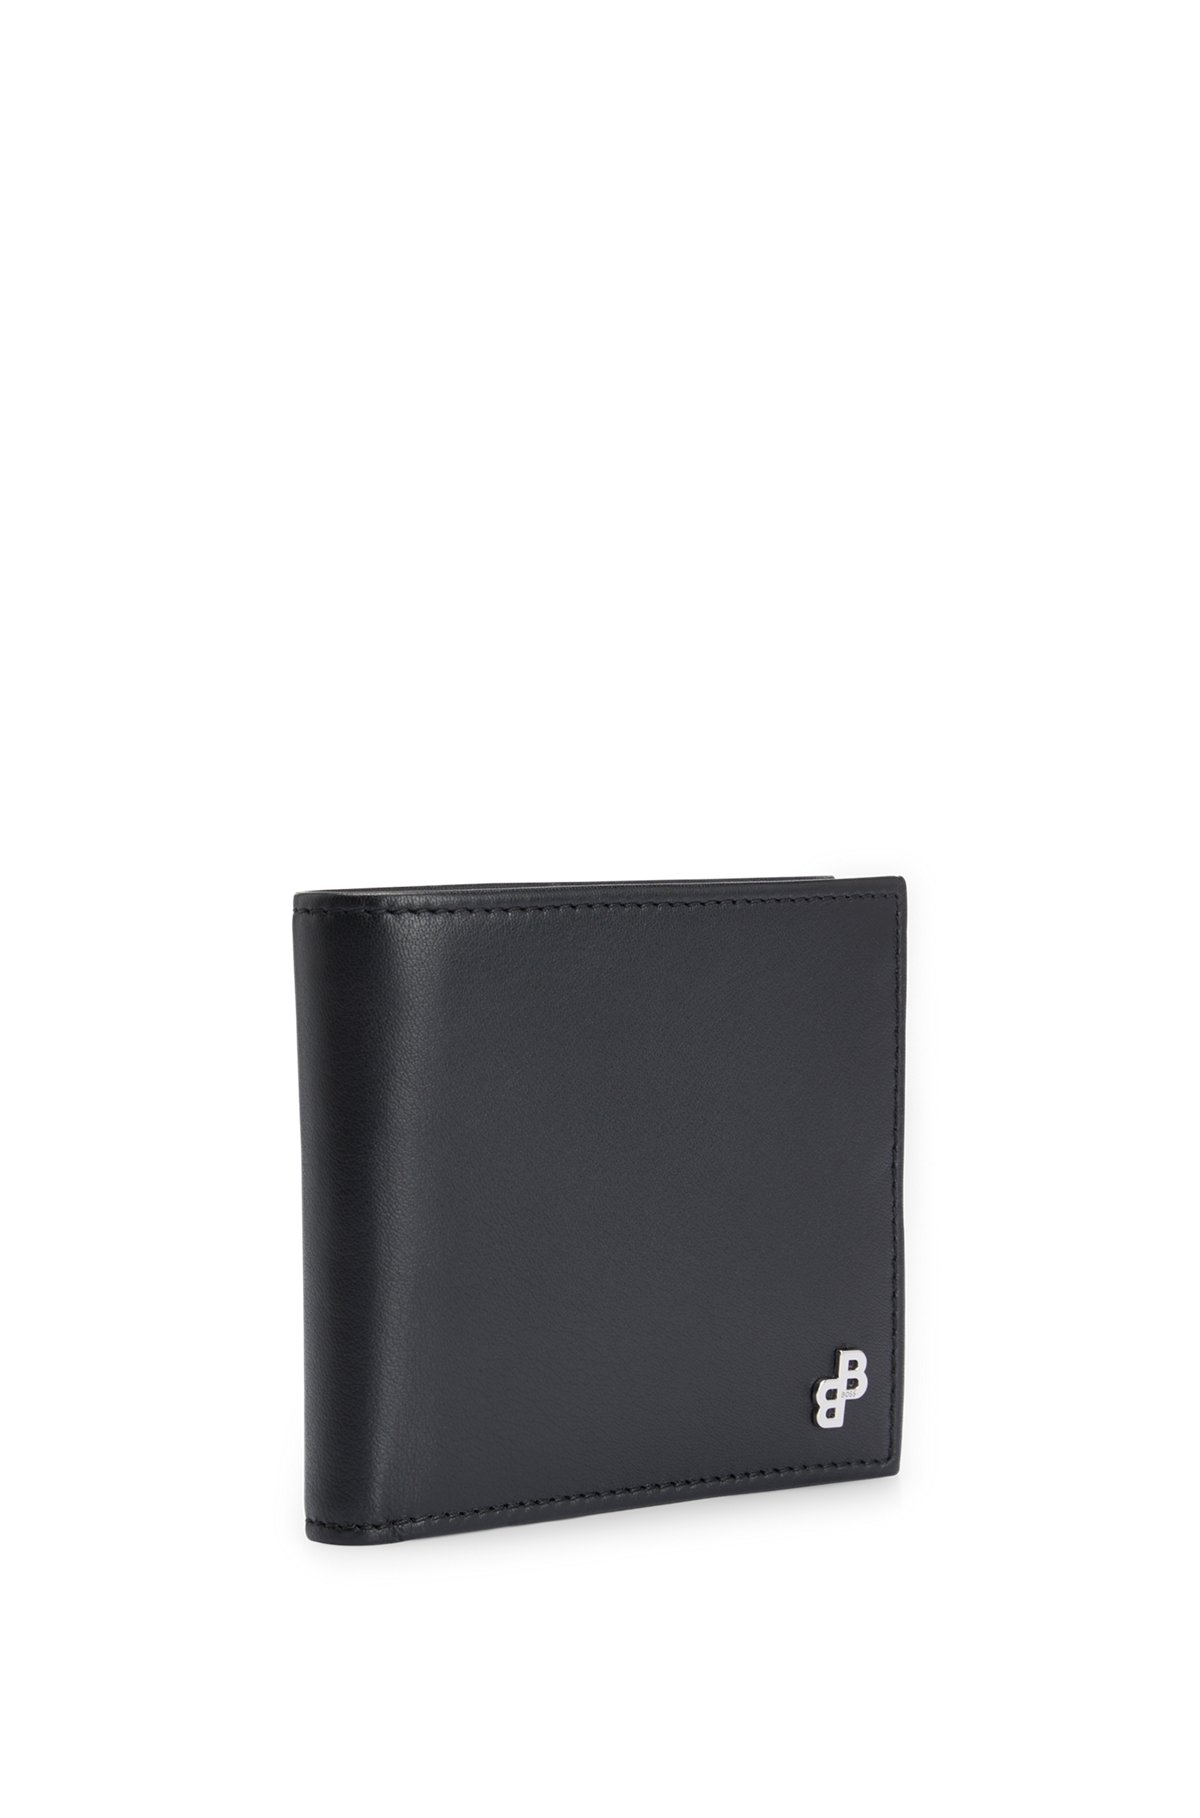 Monogram-trim leather wallet with coin pocket, Black